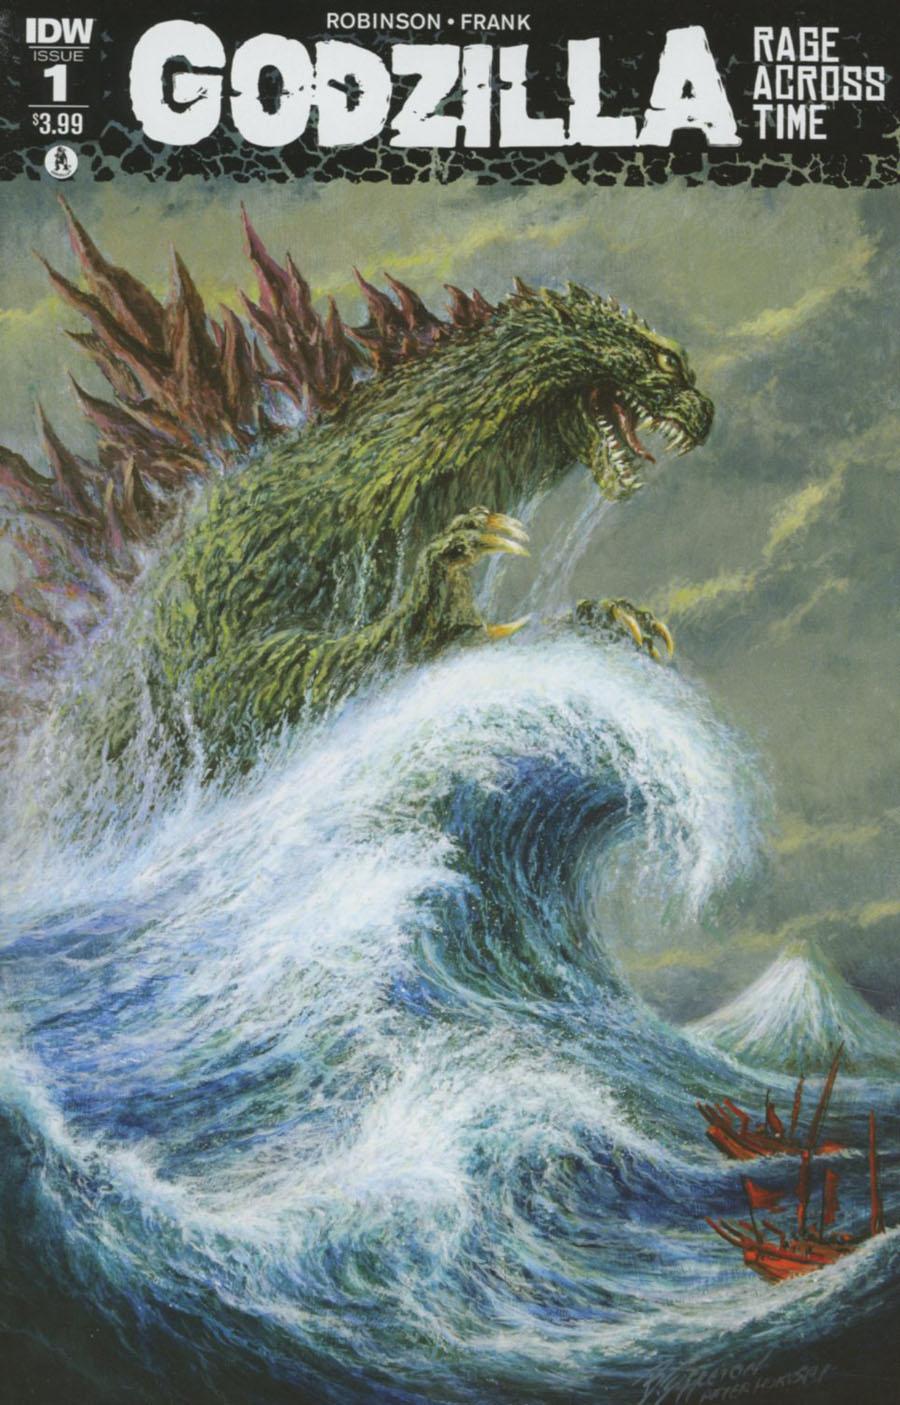 Godzilla Rage Across Time Vol. 1 #1